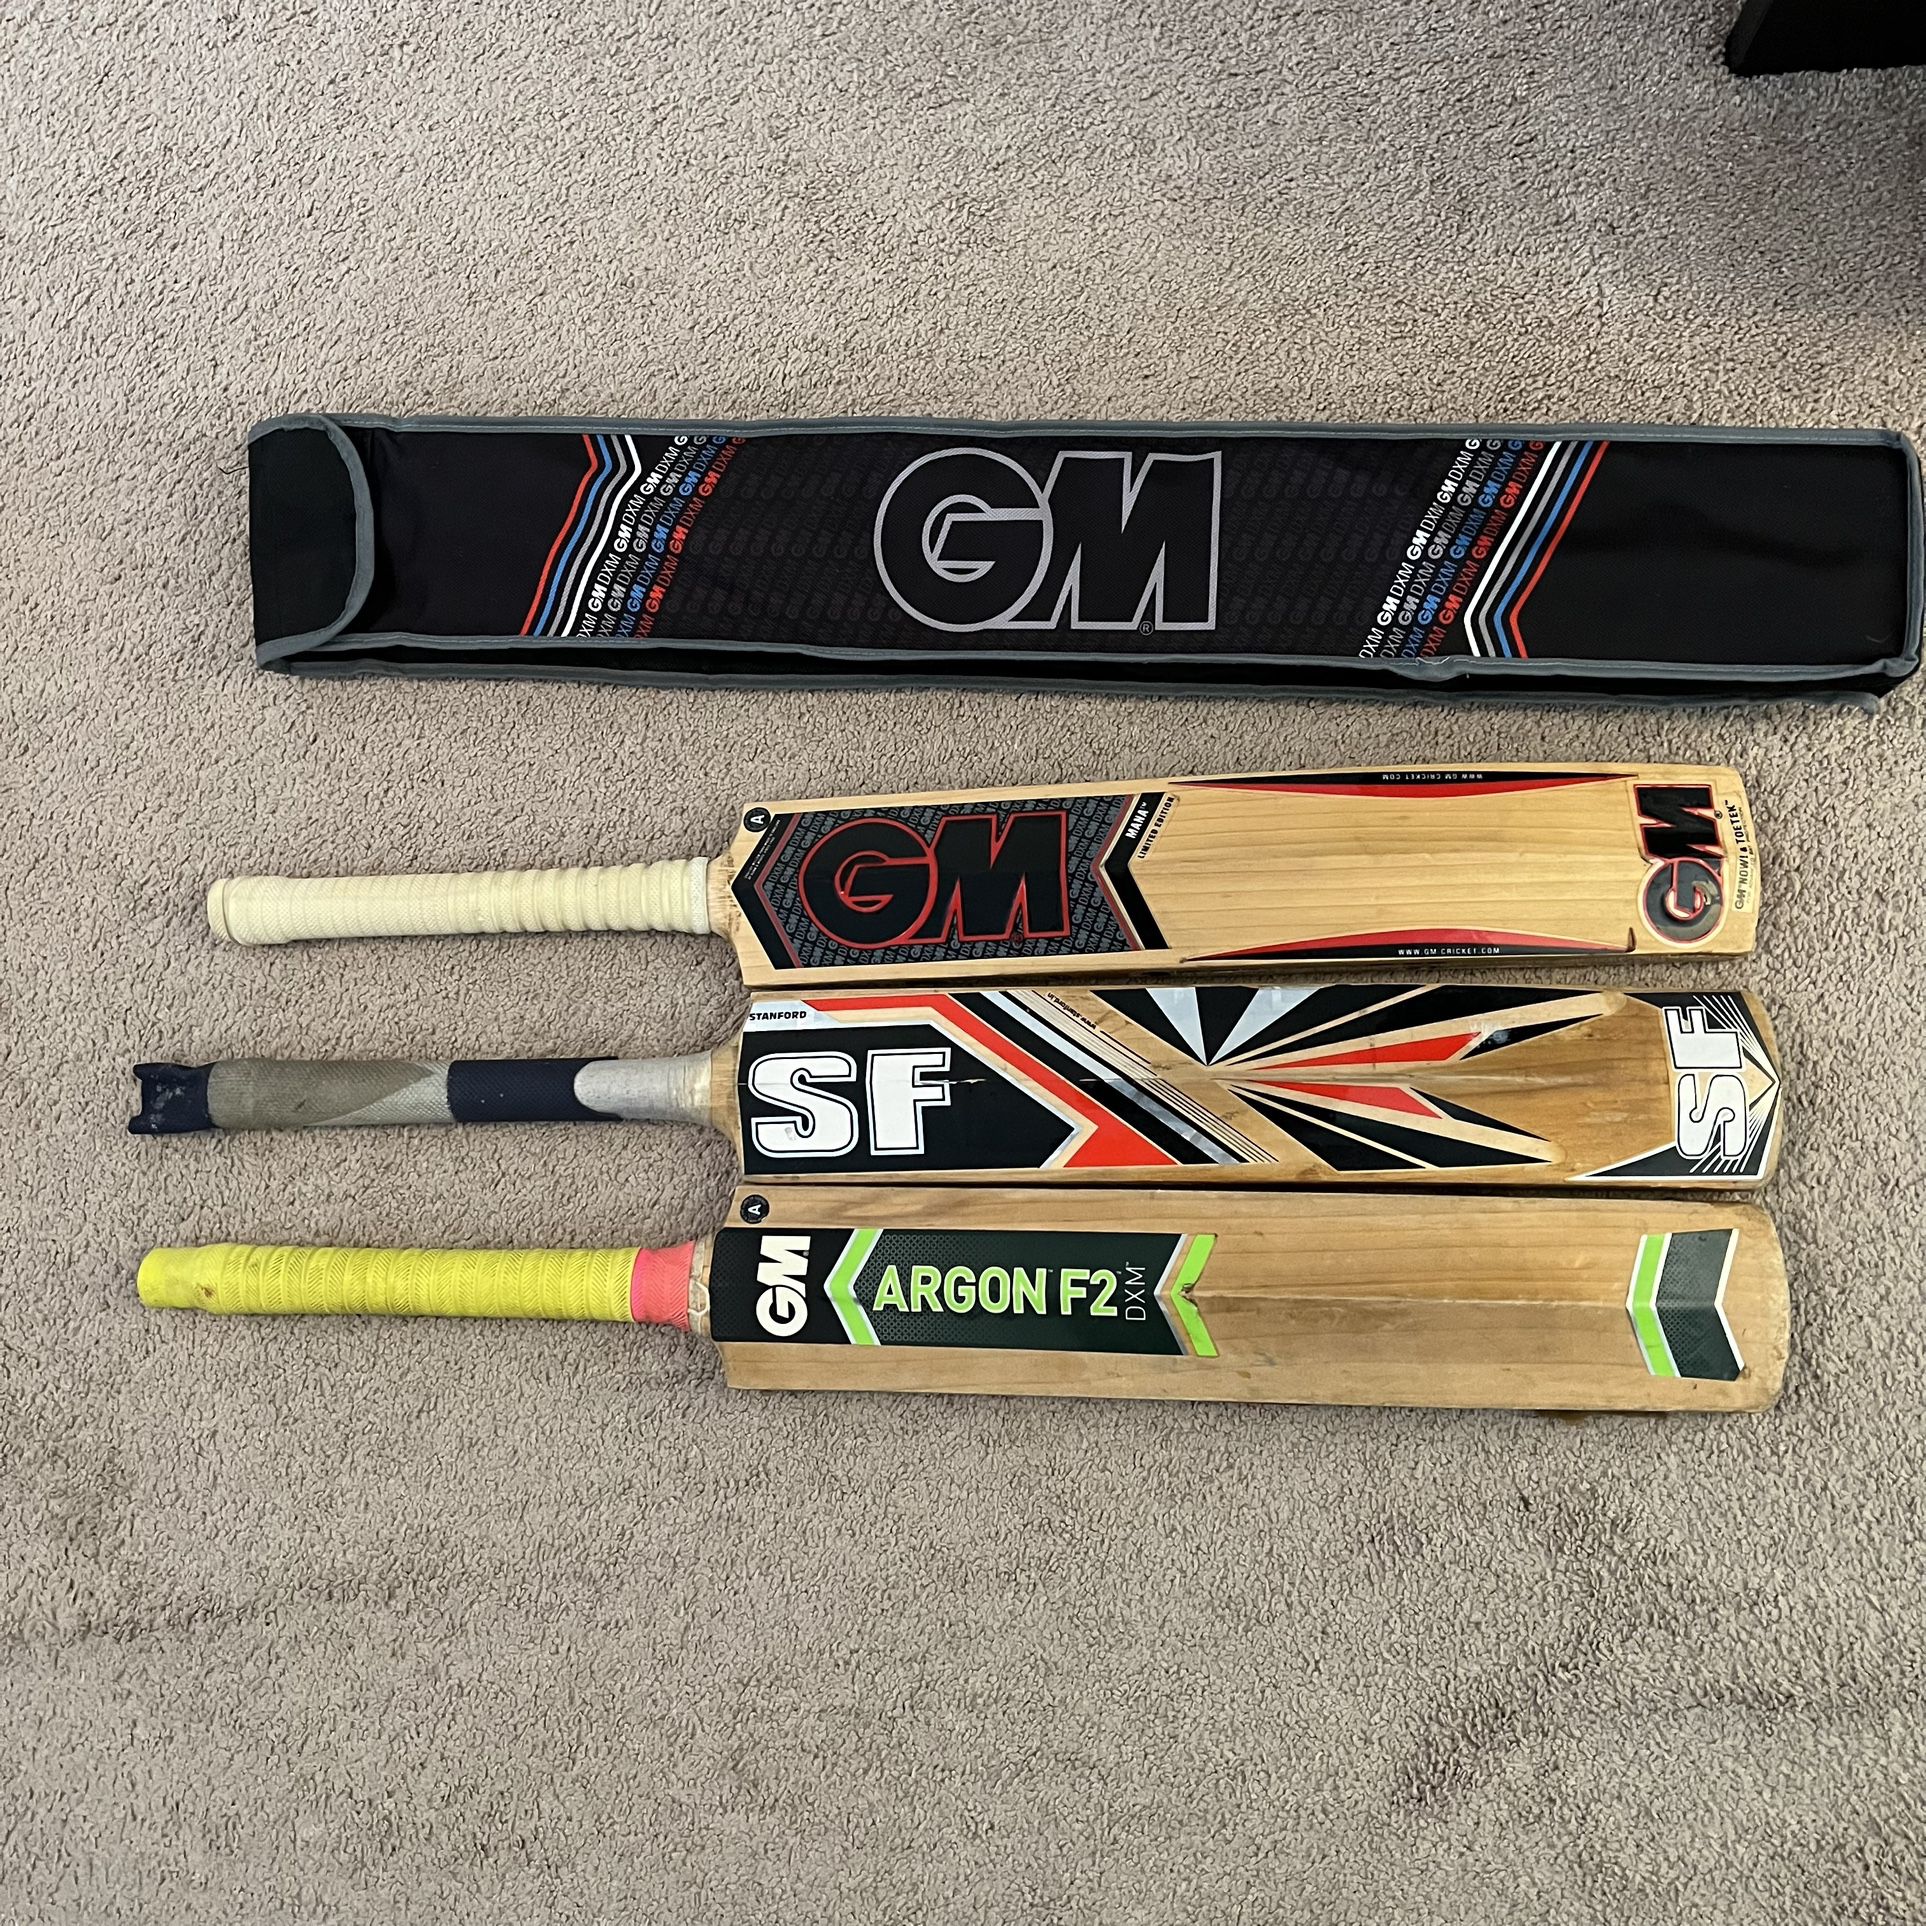 Gm And Sf Cricket Bats 